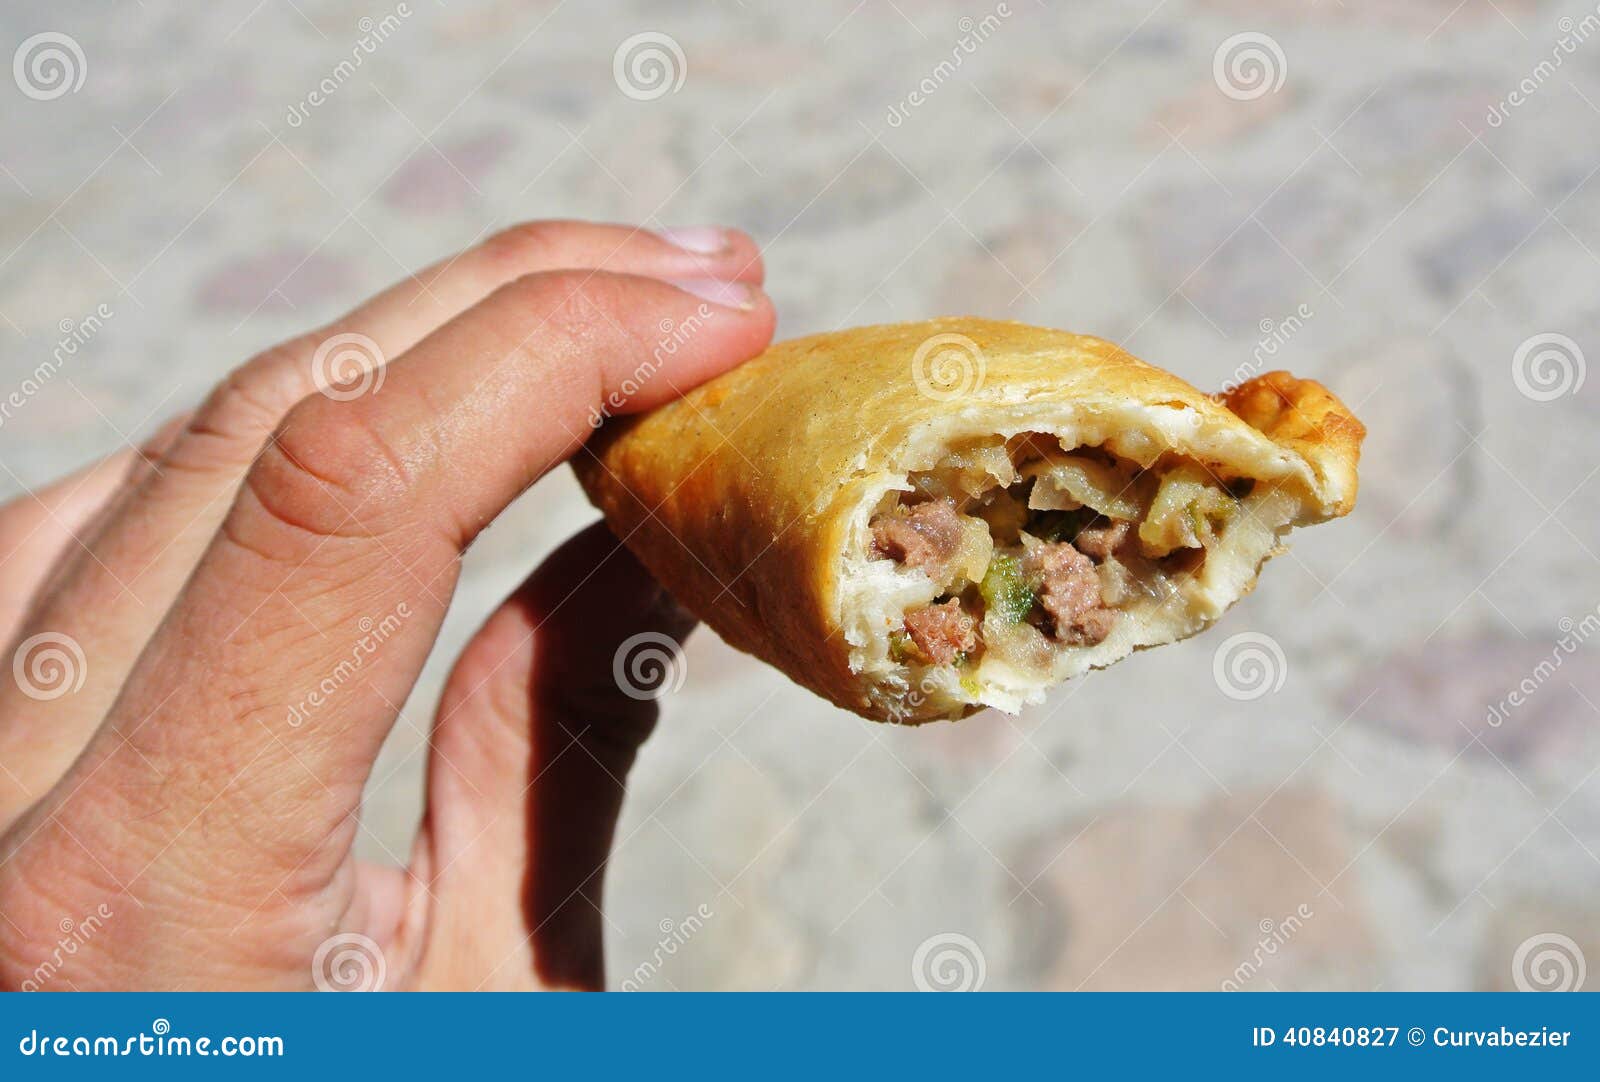 hand holding an argentinean empanada